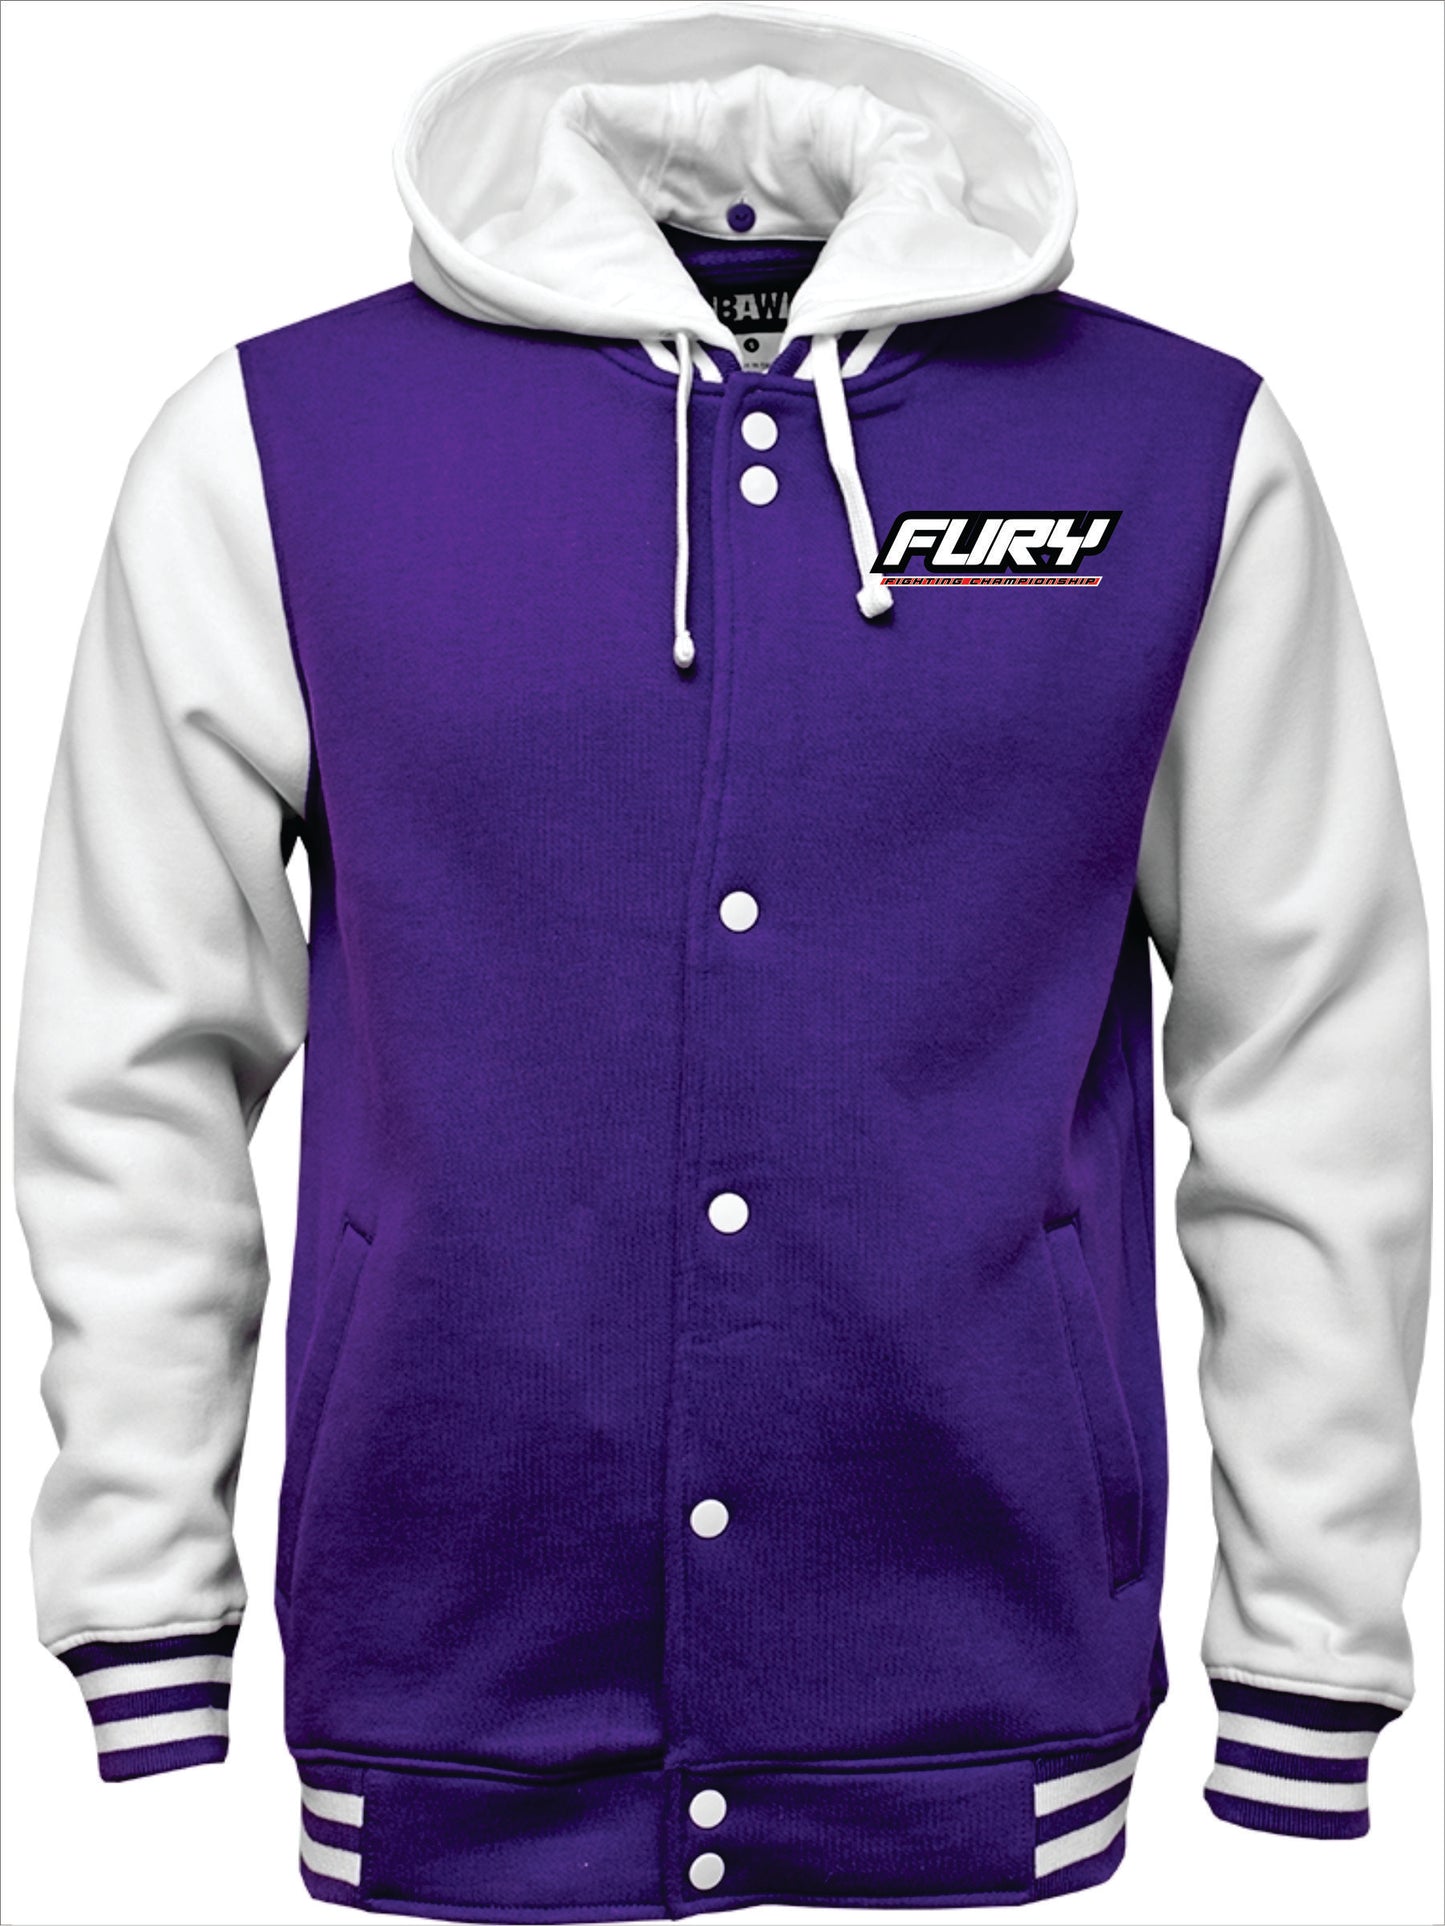 Fury FC Embroidered Letterman Jacket